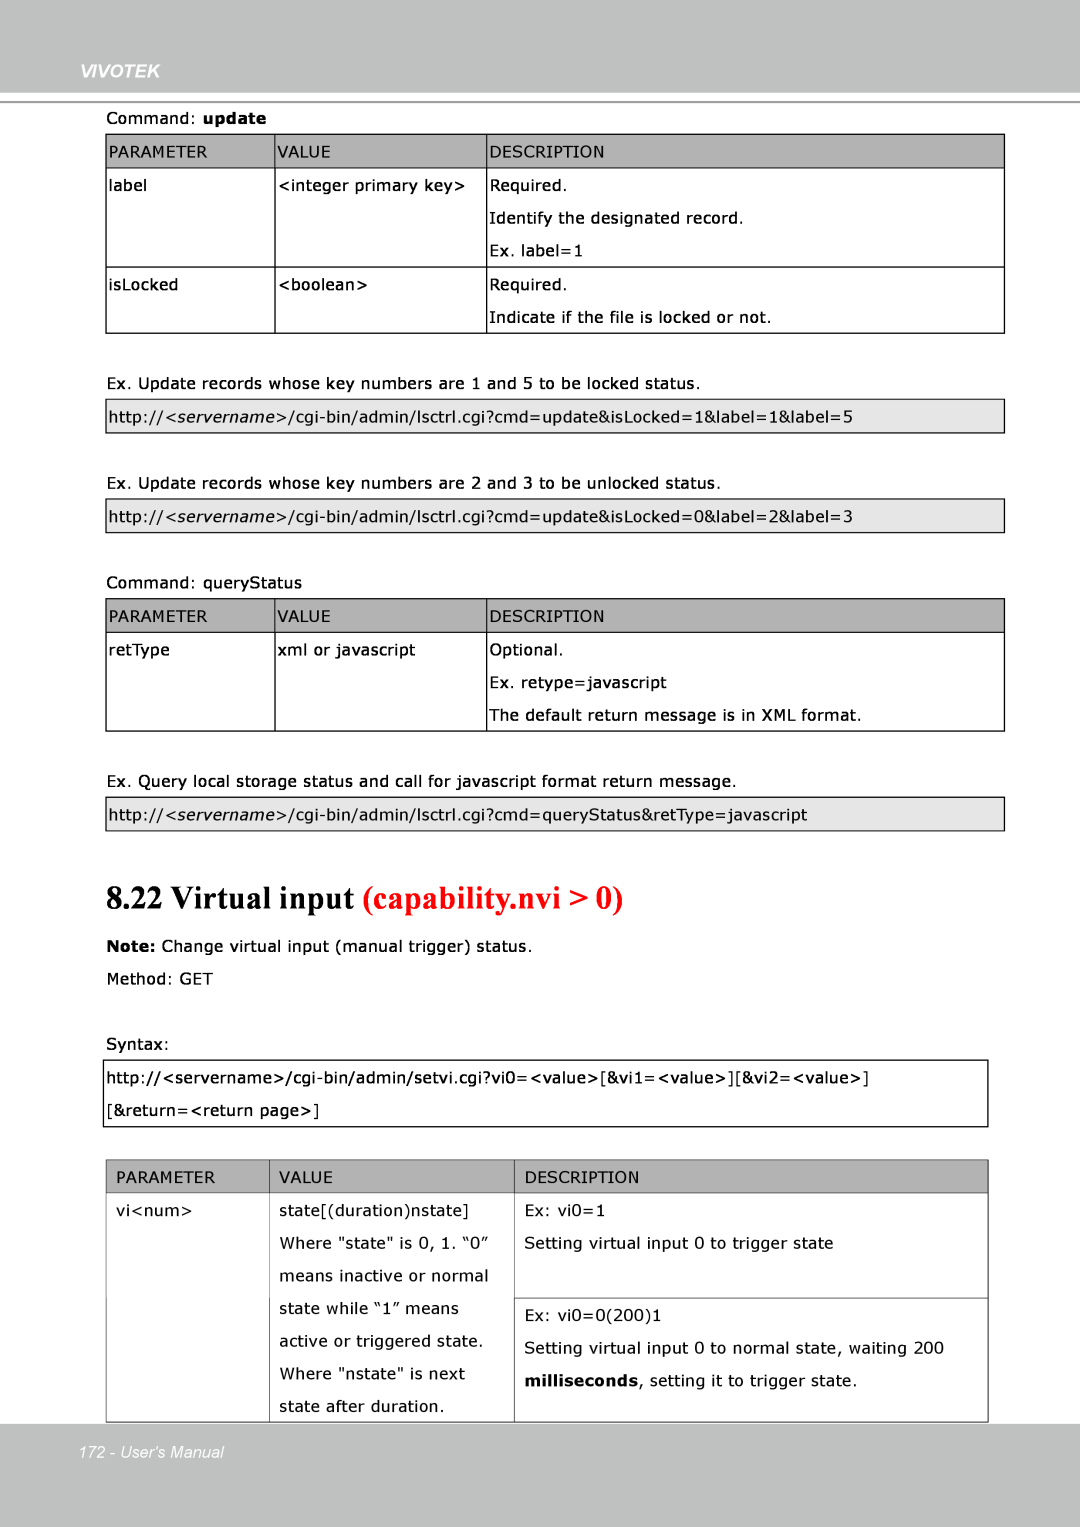 Vivotek IP8151 manual Virtual input capability.nvi, Vivotek, Users Manual 